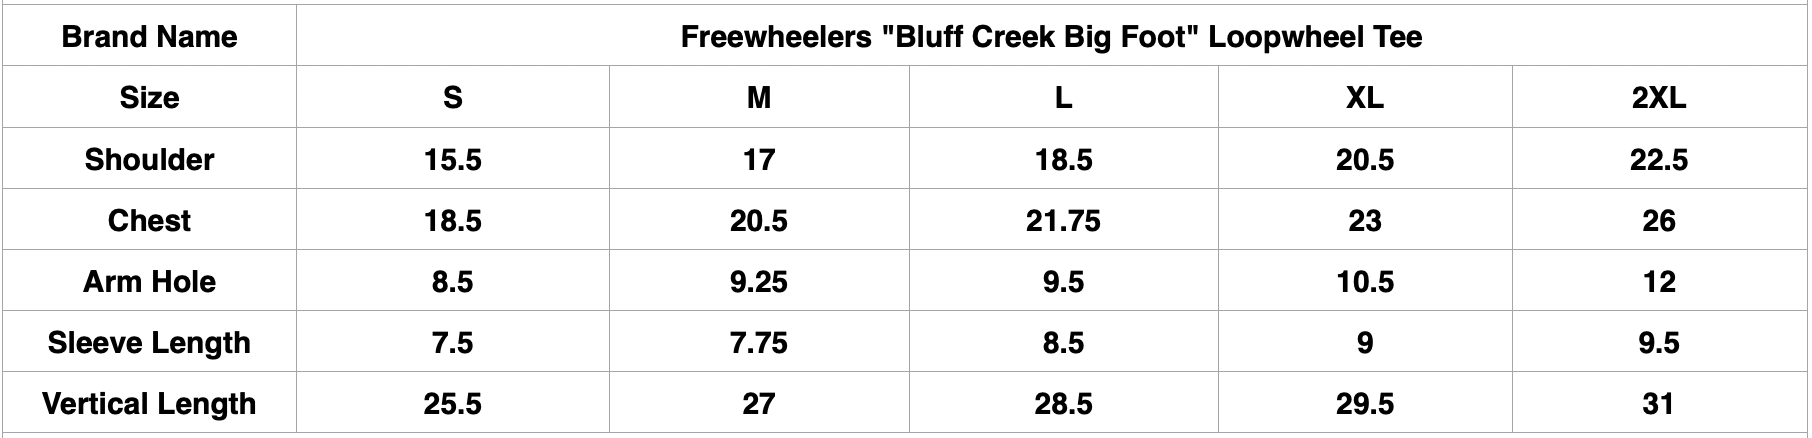 Freewheelers "Bluff Creek Big Foot" Loopwheel Tee (Skull White)